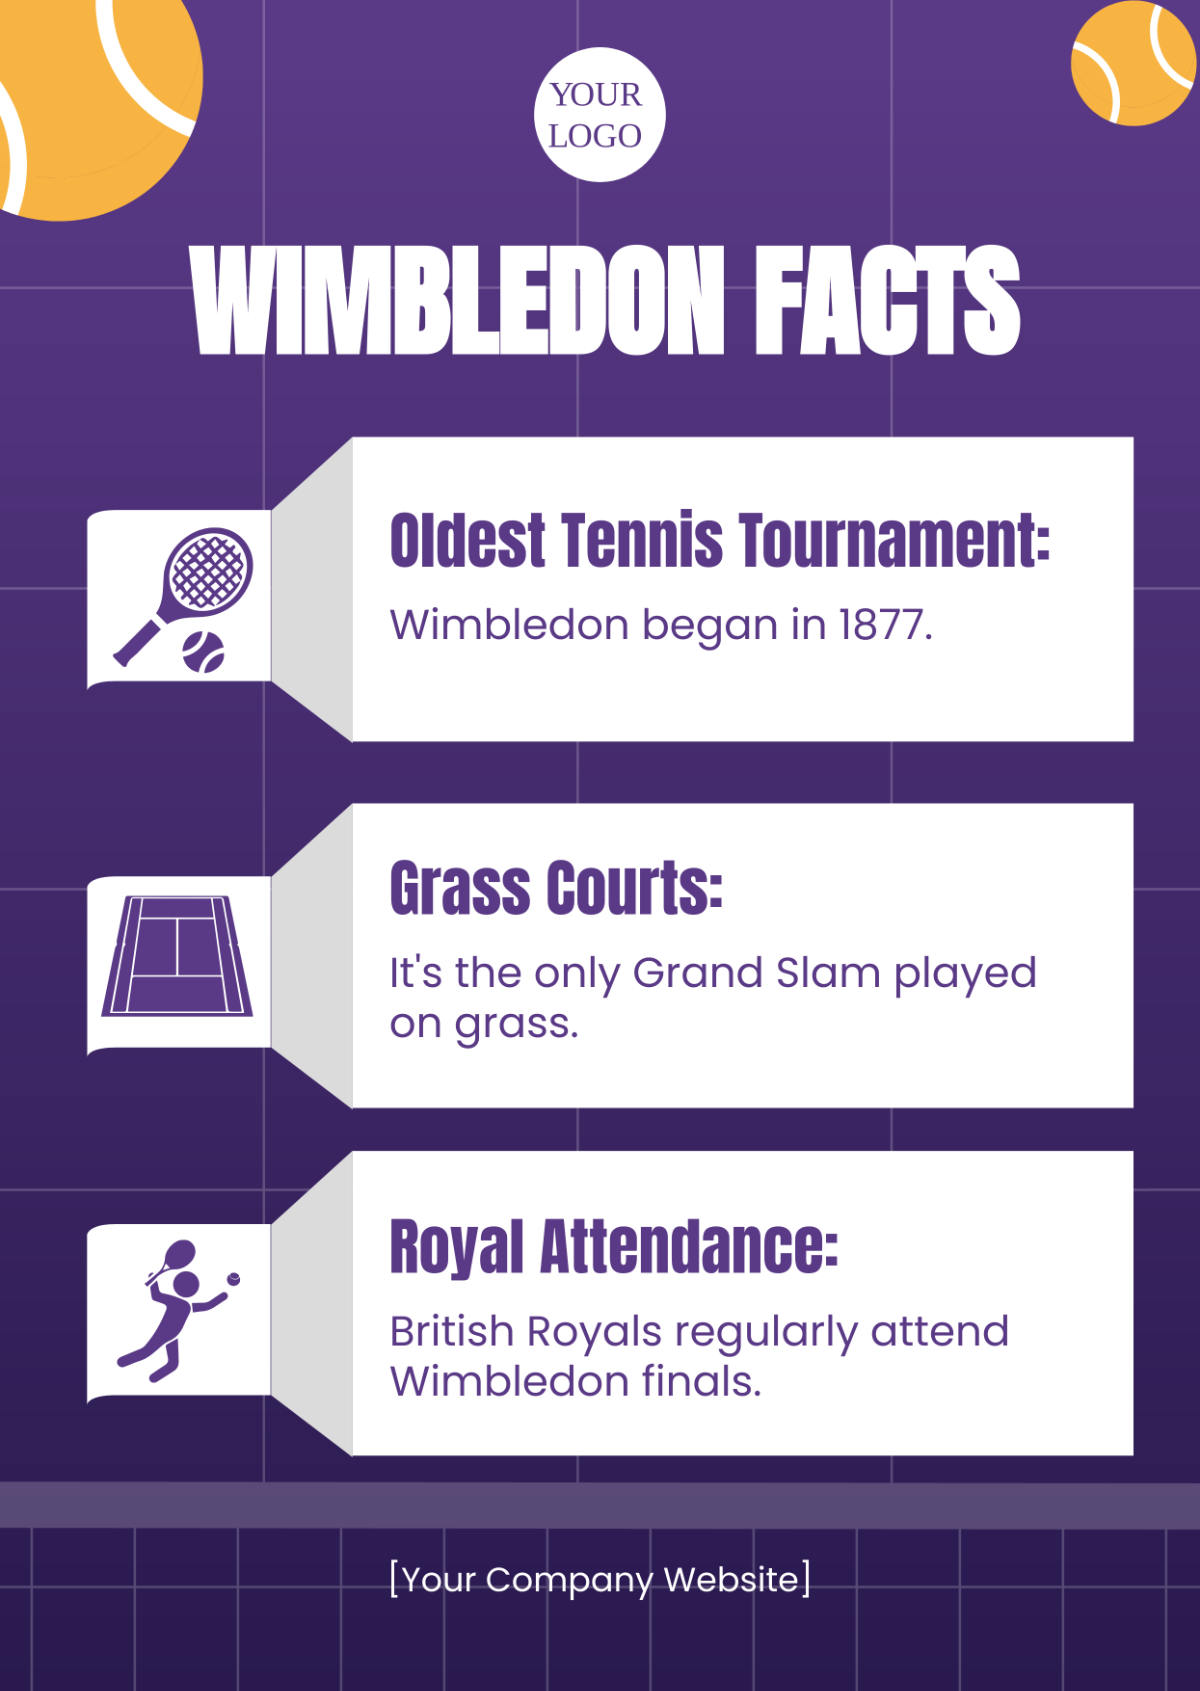 Wimbledon Facts Infographic